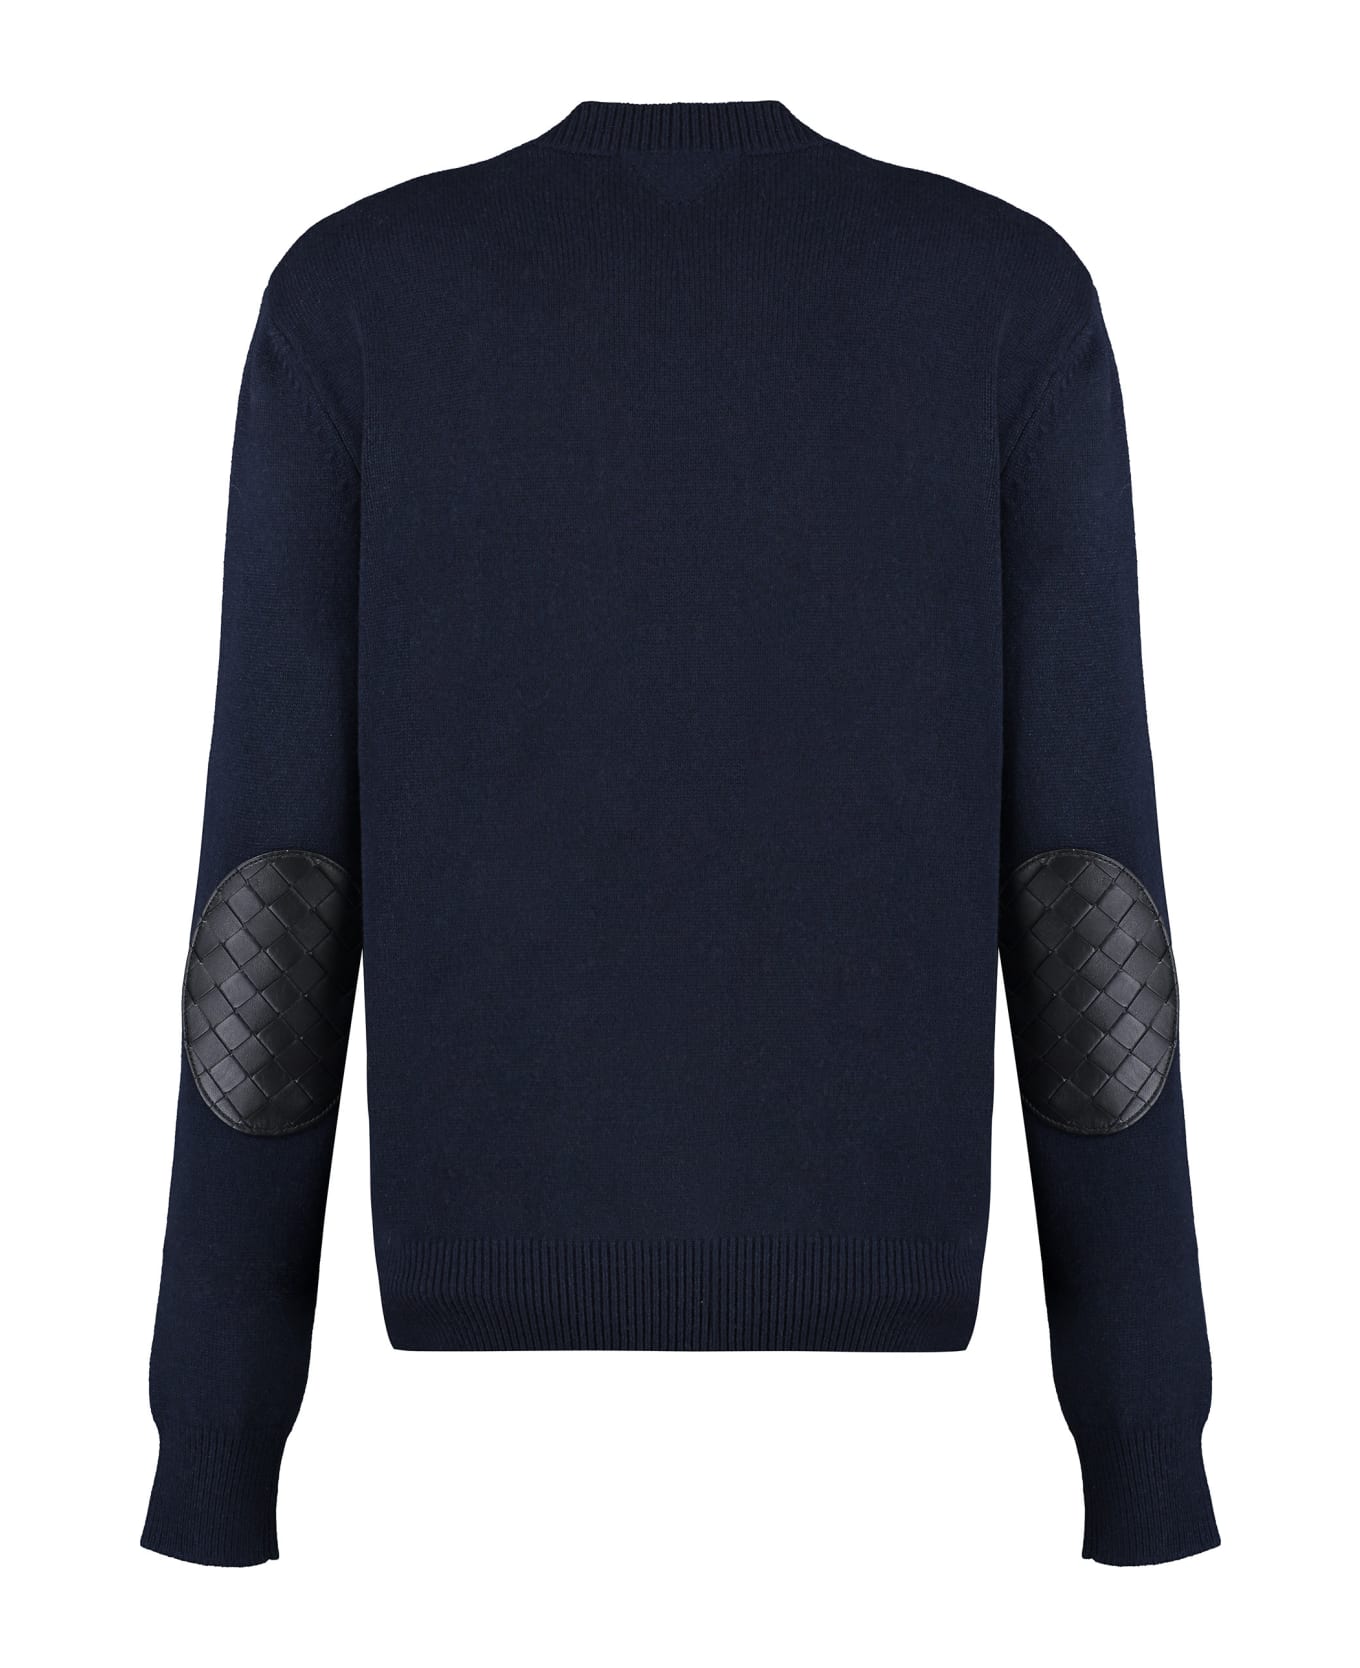 Bottega Veneta Cashmere Sweater - blue ニットウェア